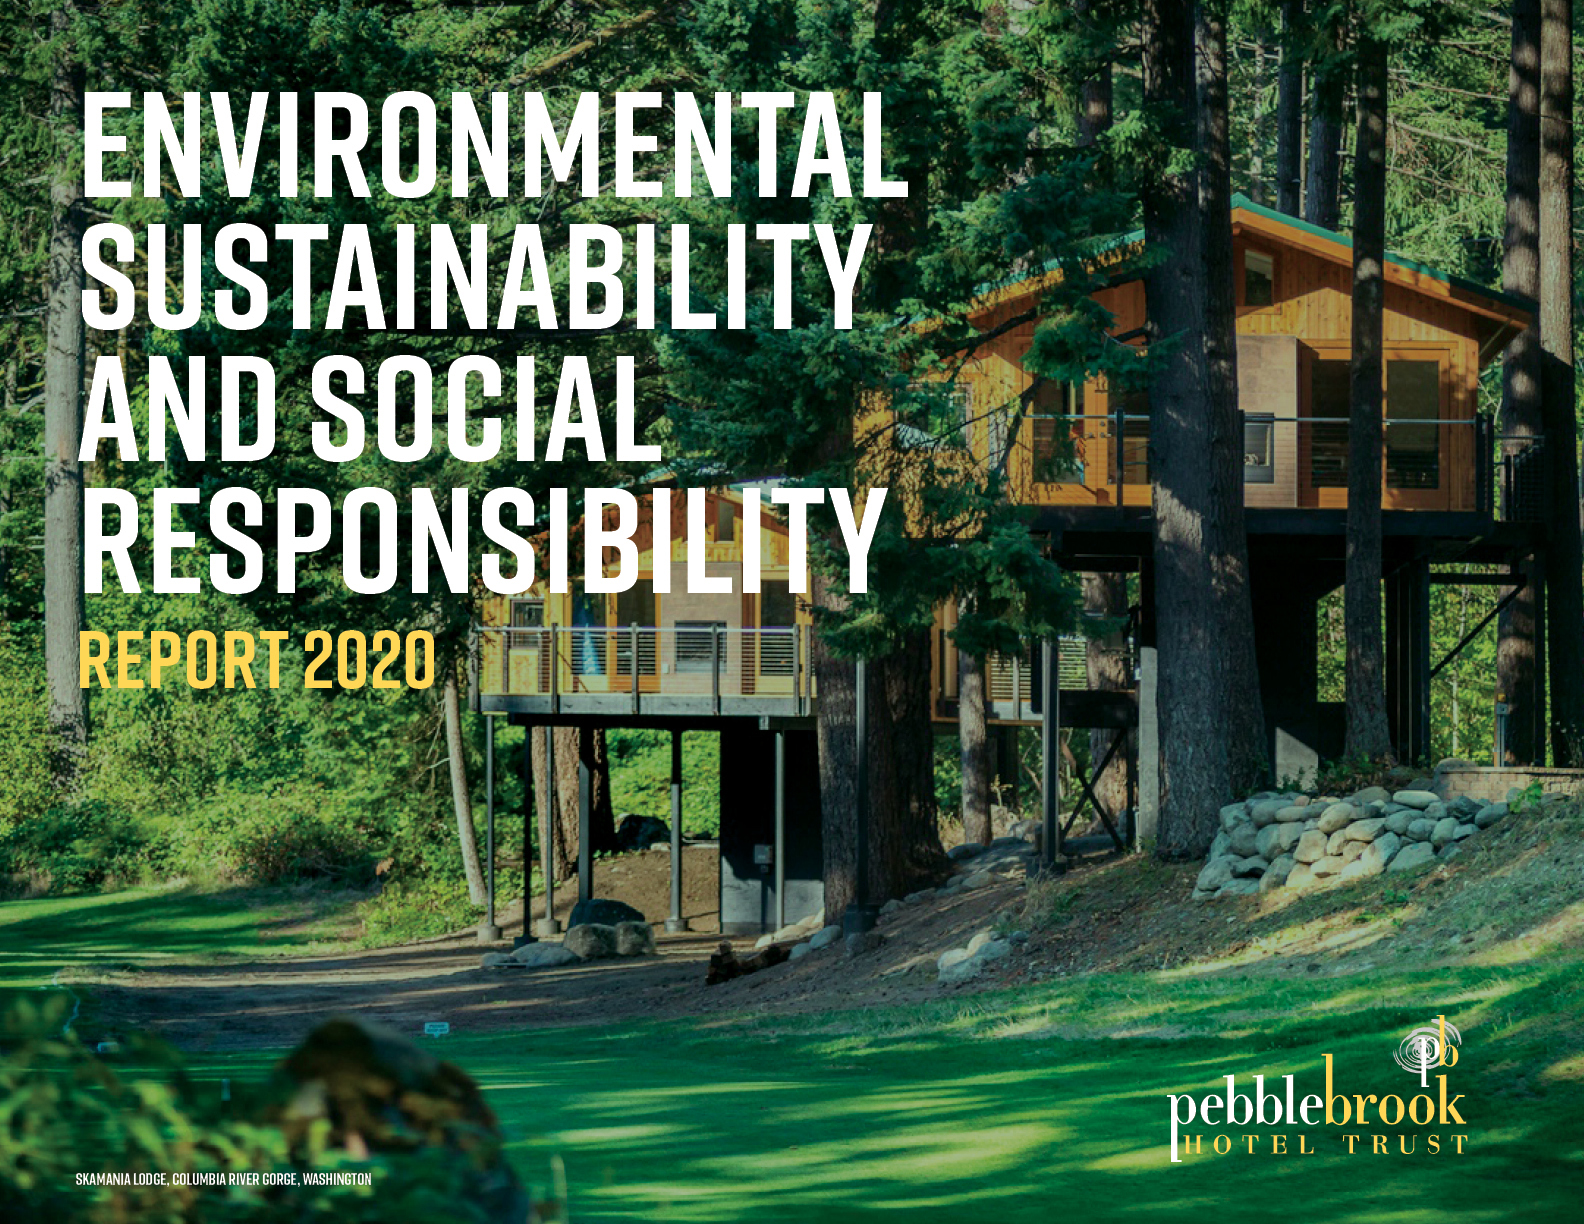 Pebblebrook Environmental Sustainability & Social Responsibility Report 2020